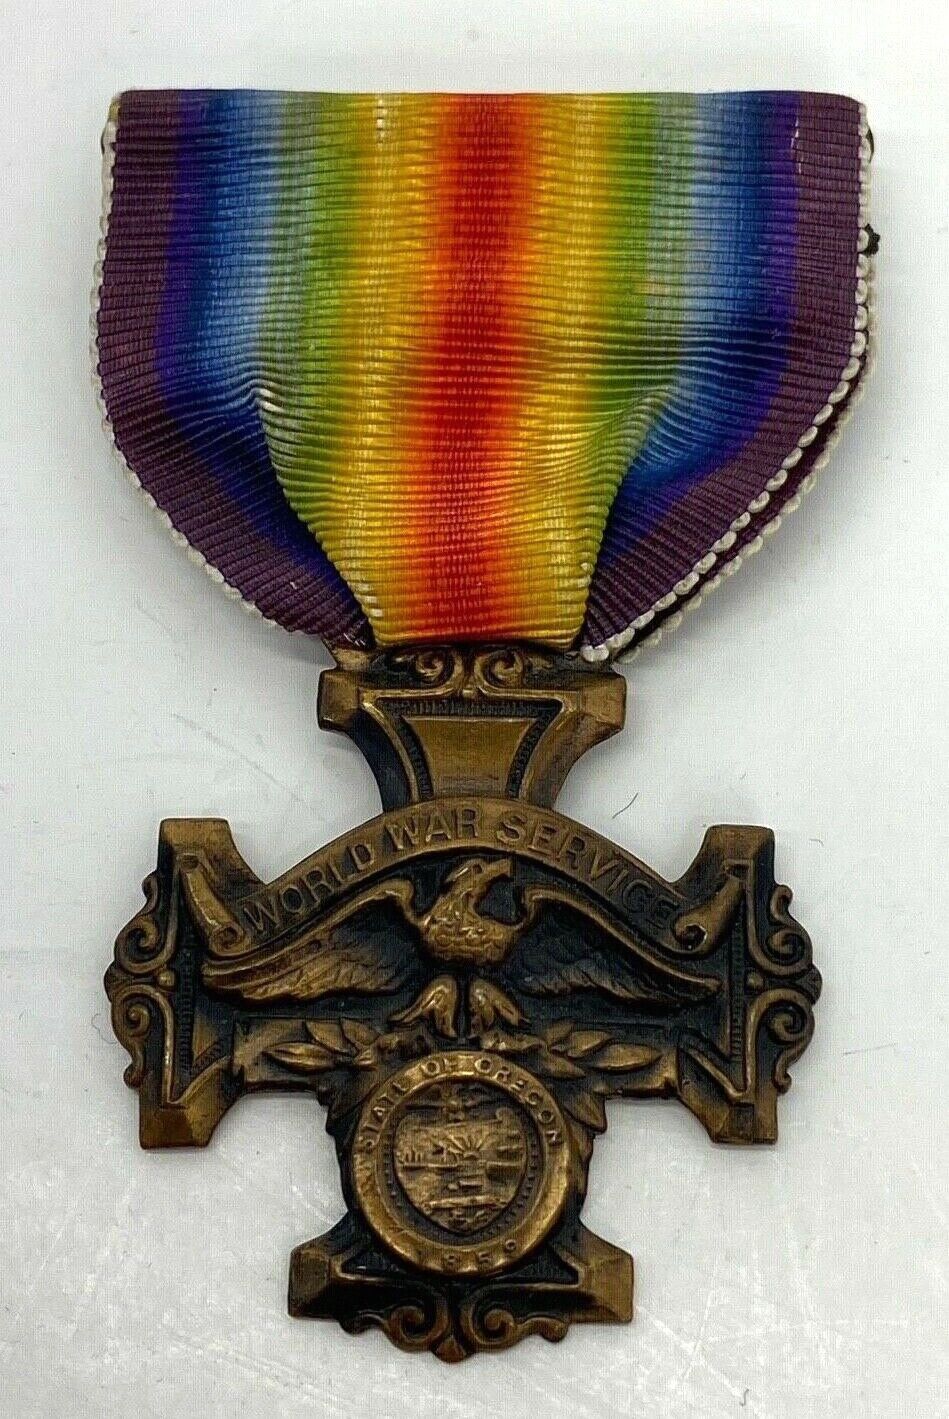 Original Oregon State US Army WWI Service Medal